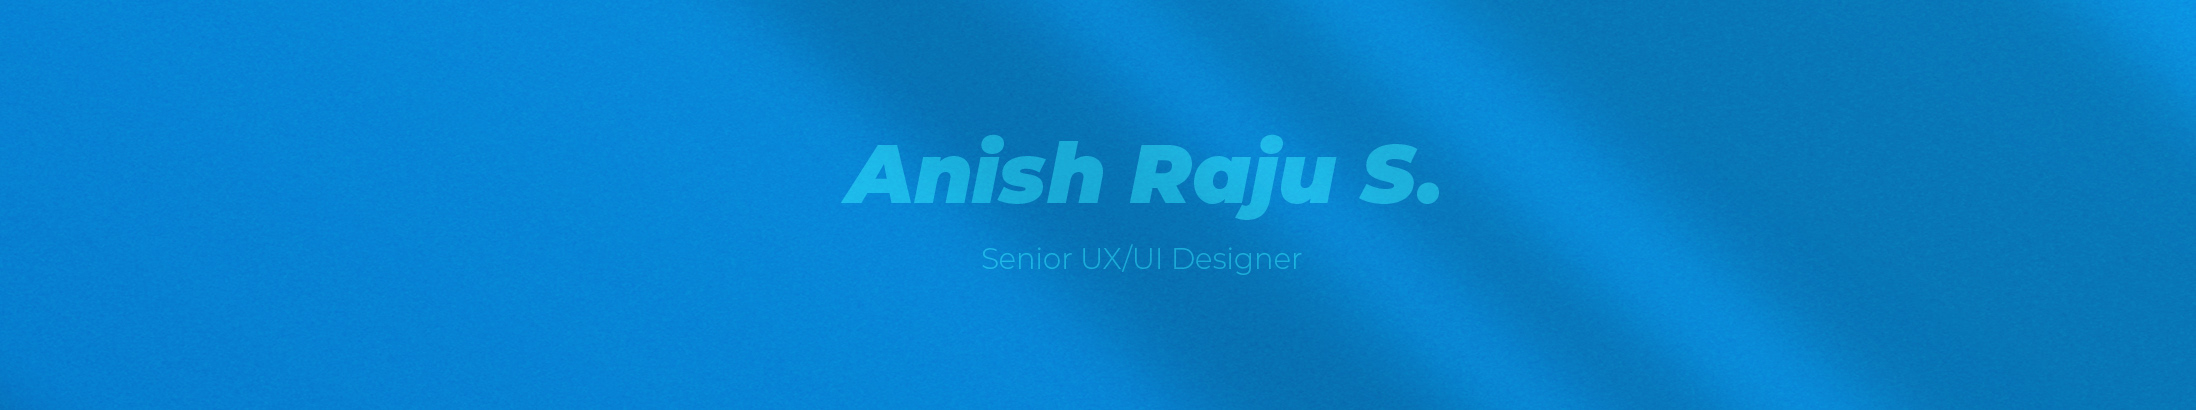 Anish Raju S's profile banner